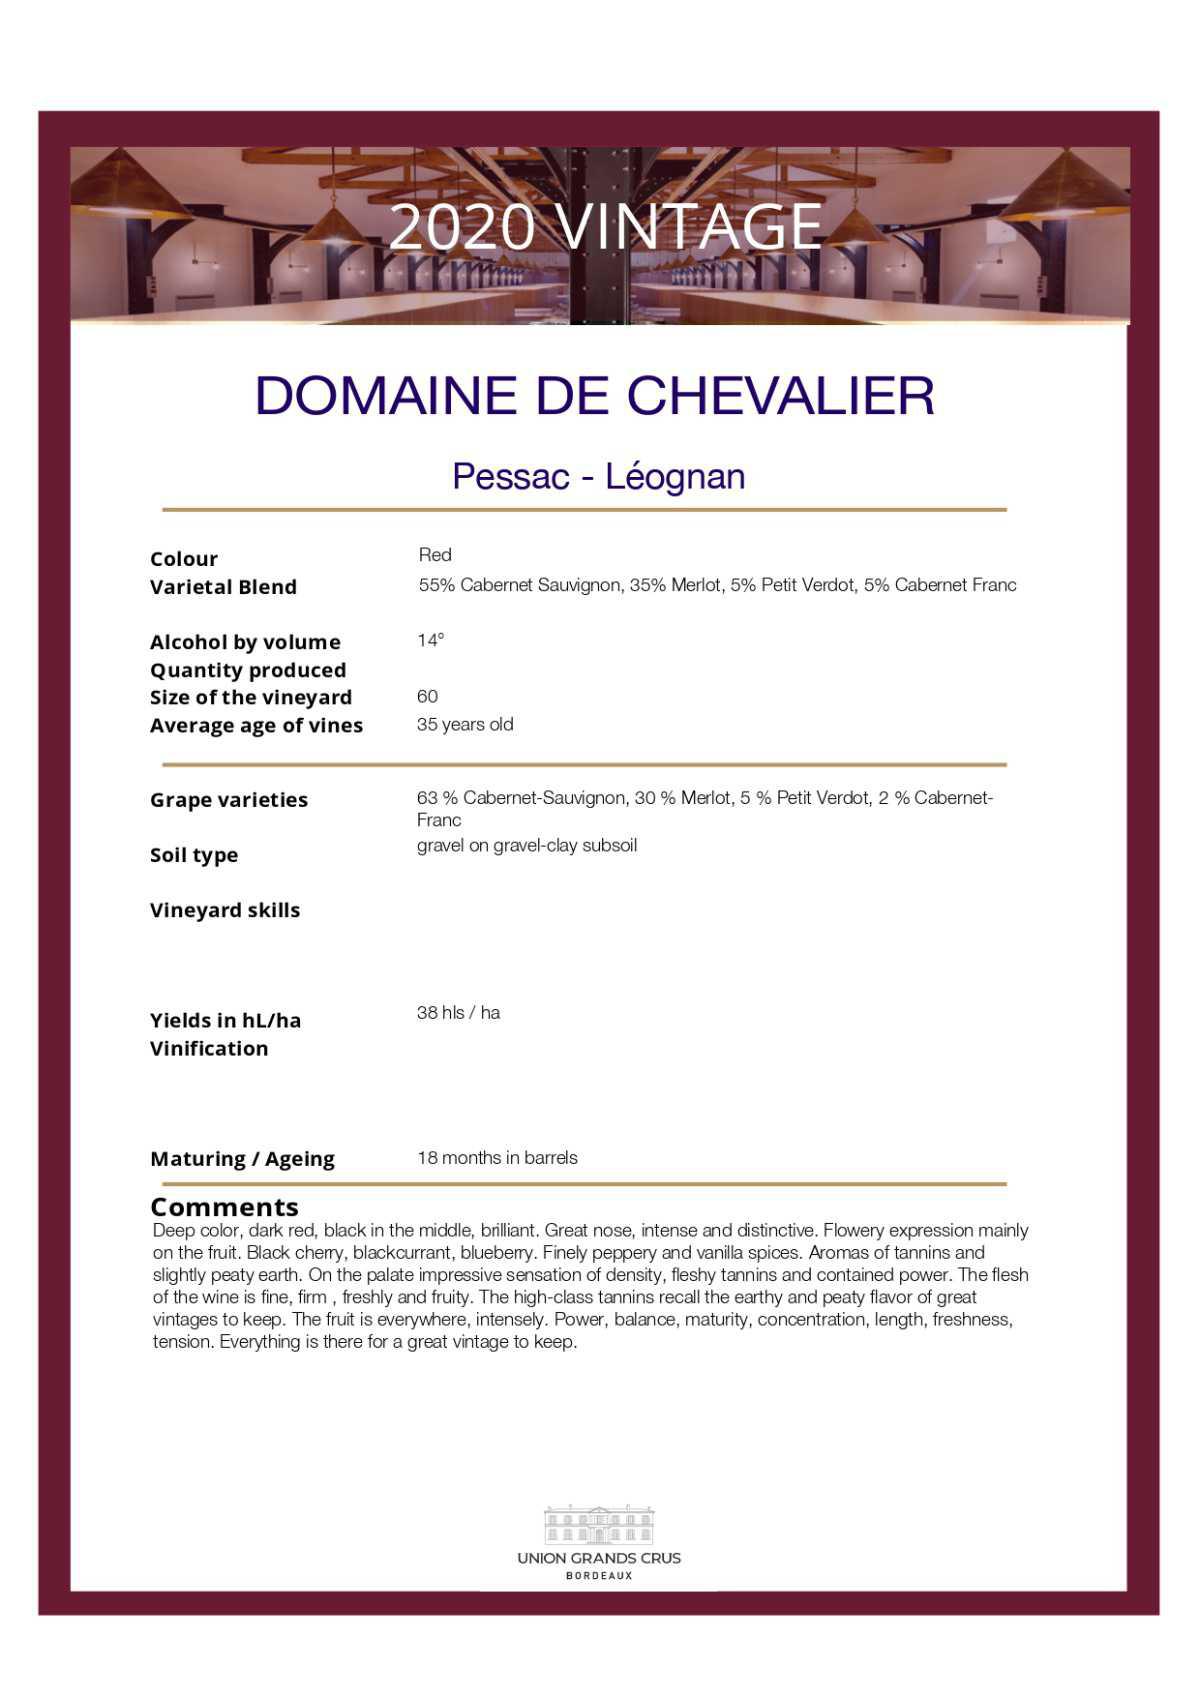 Domaine de Chevalier - Red